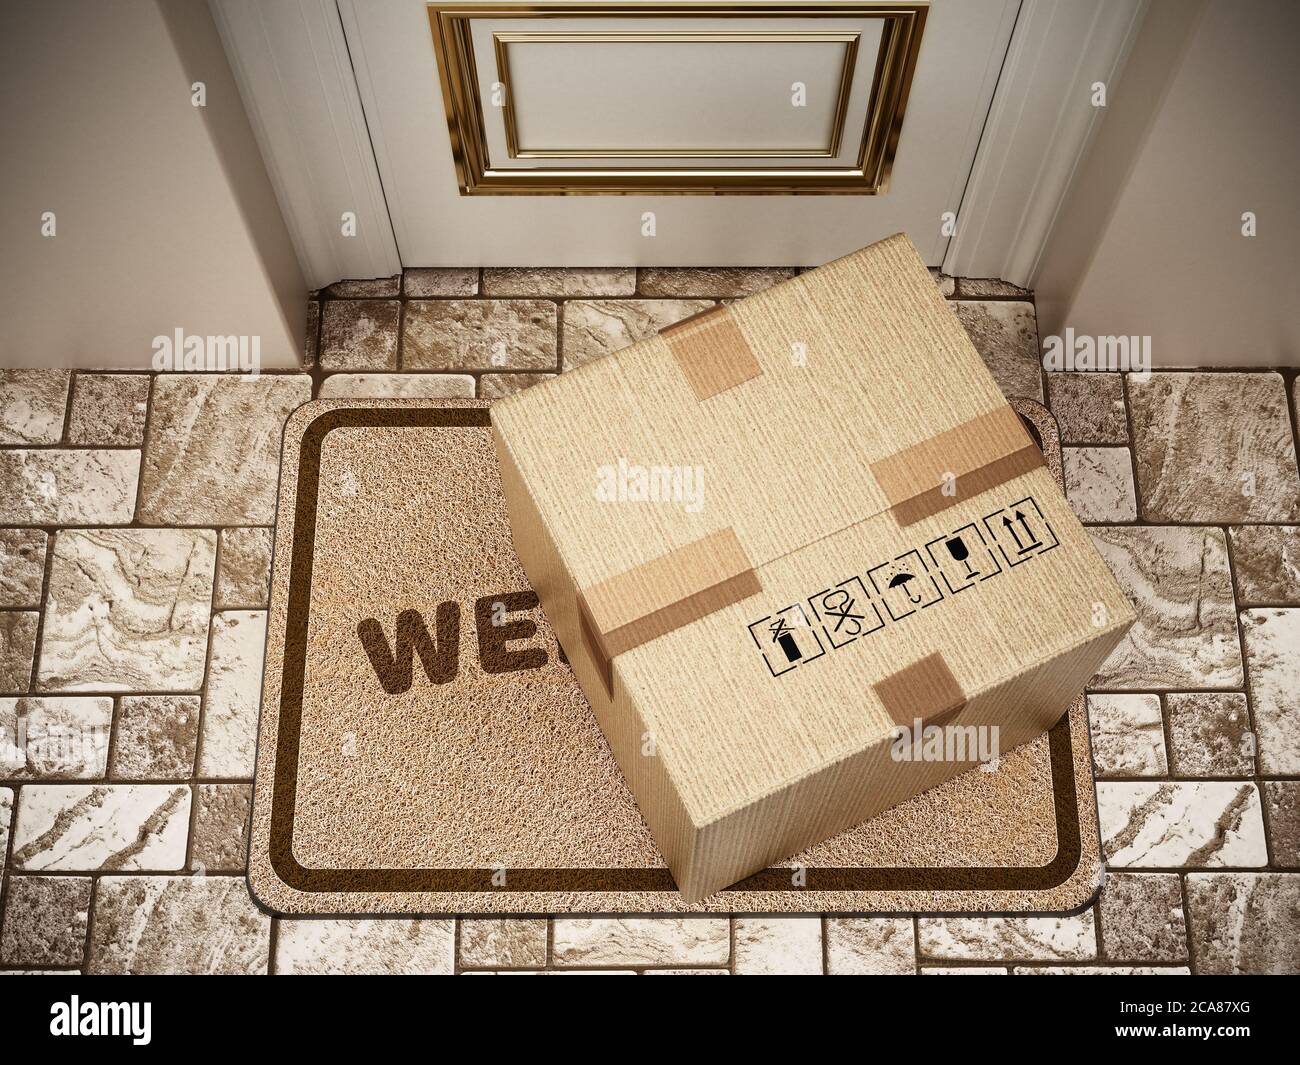 Cargo box standing on doormat. 3D illustration. Stock Photo